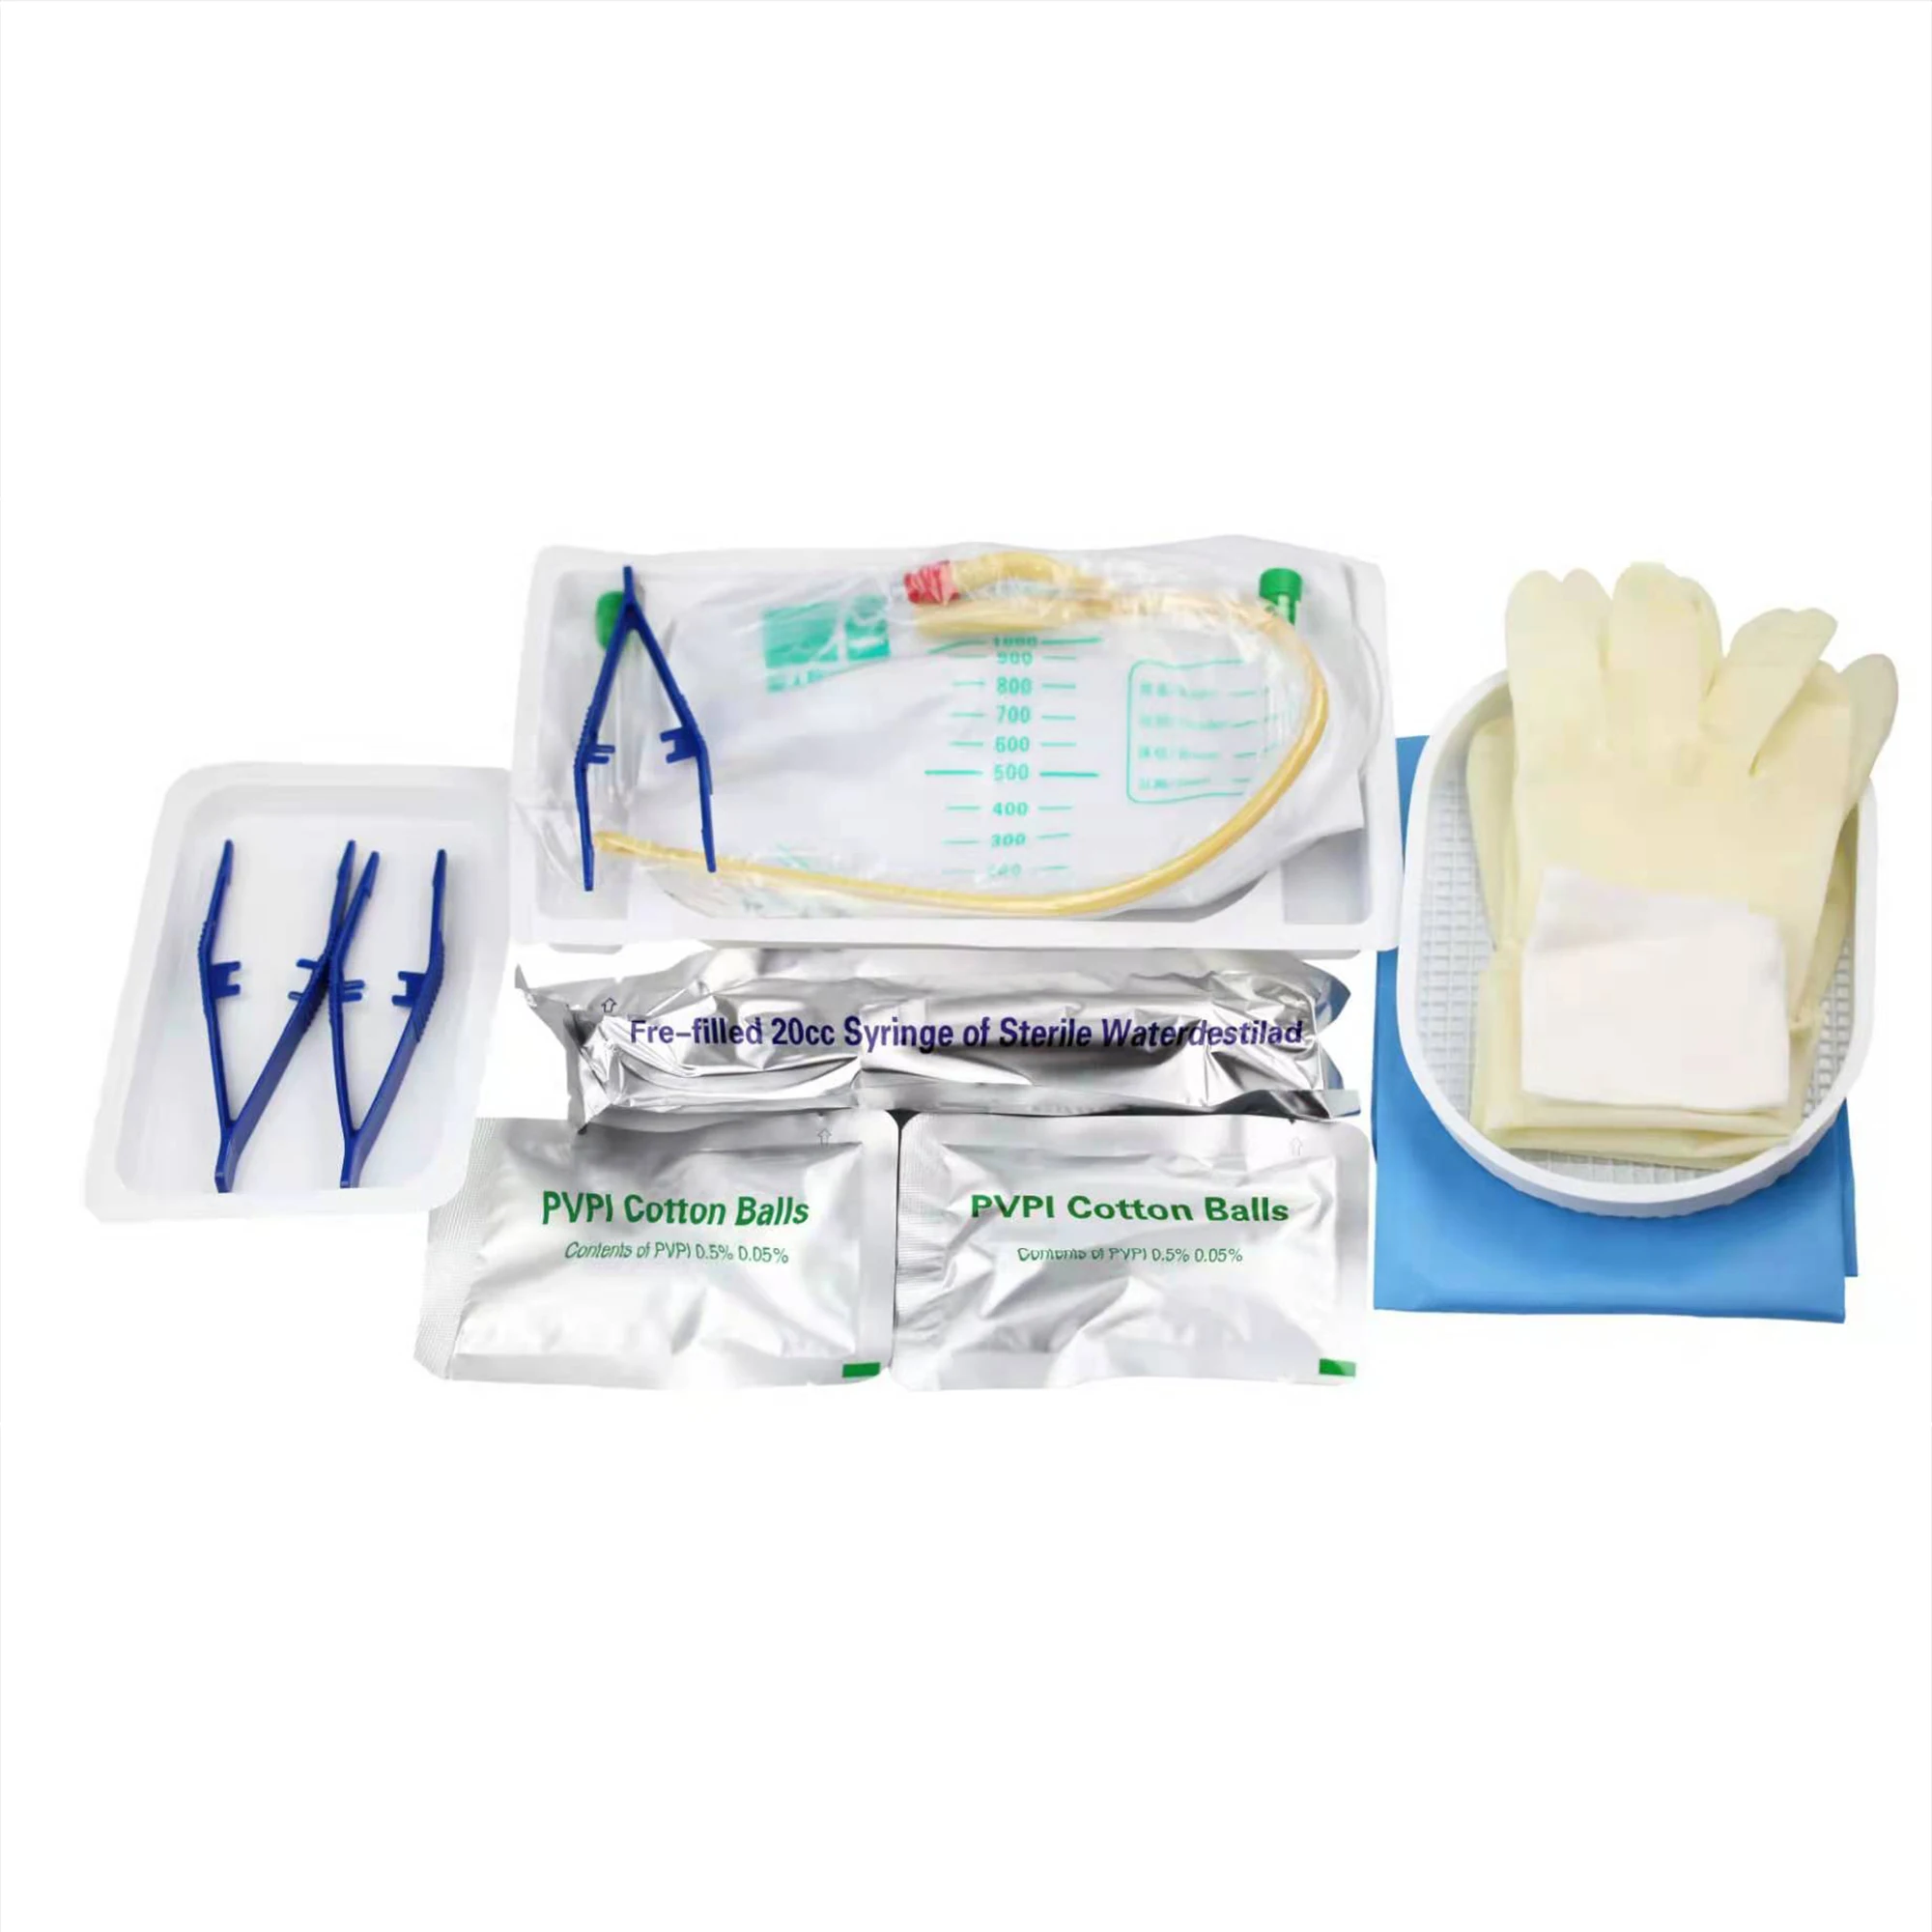 
Disposable Central Venous foley catheter Kit  (1600183336280)